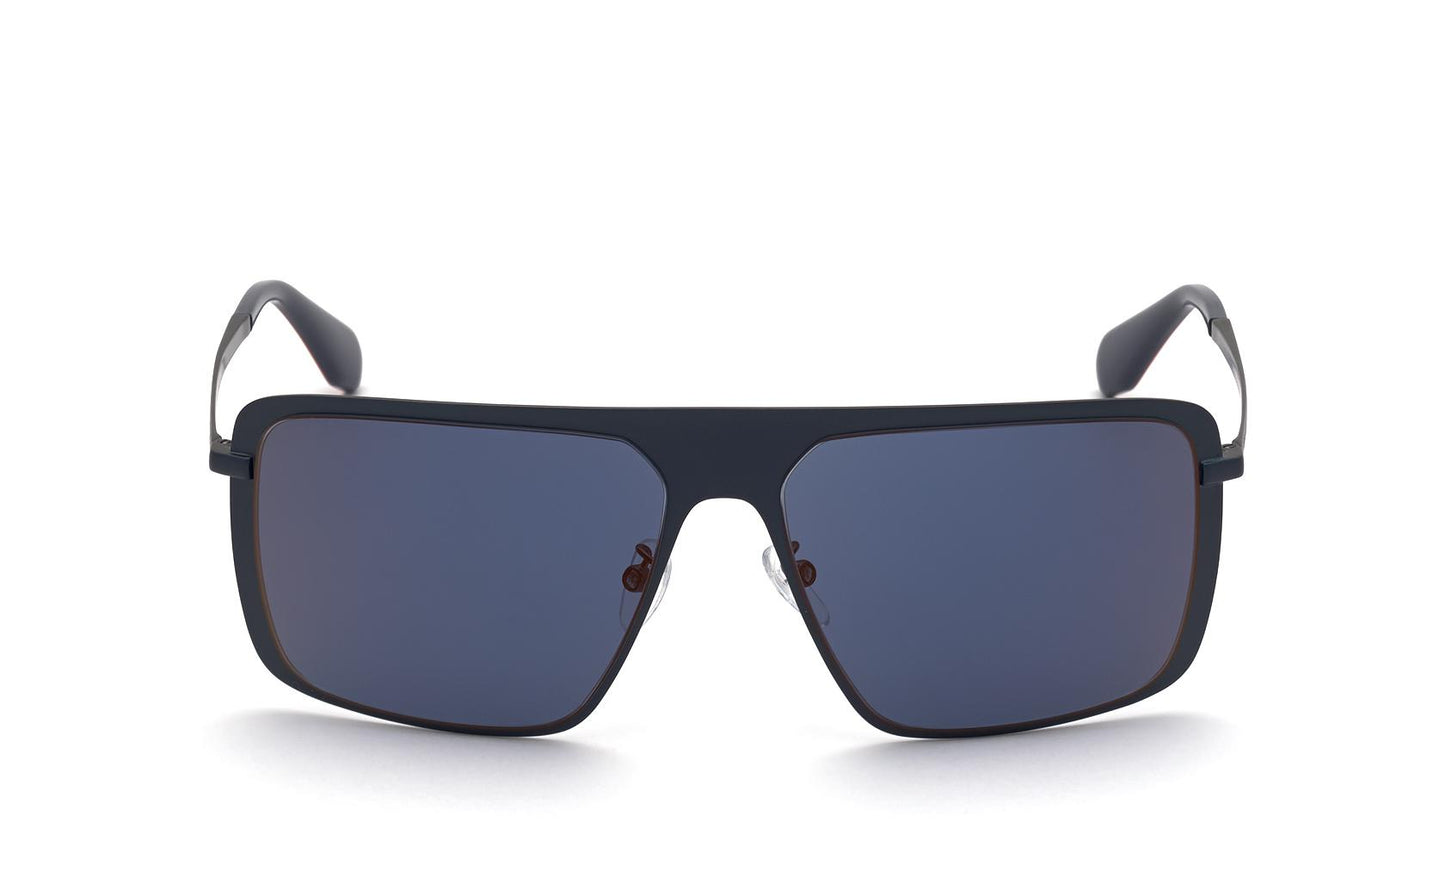 Adidas Originals Sunglasses OR0036 91X